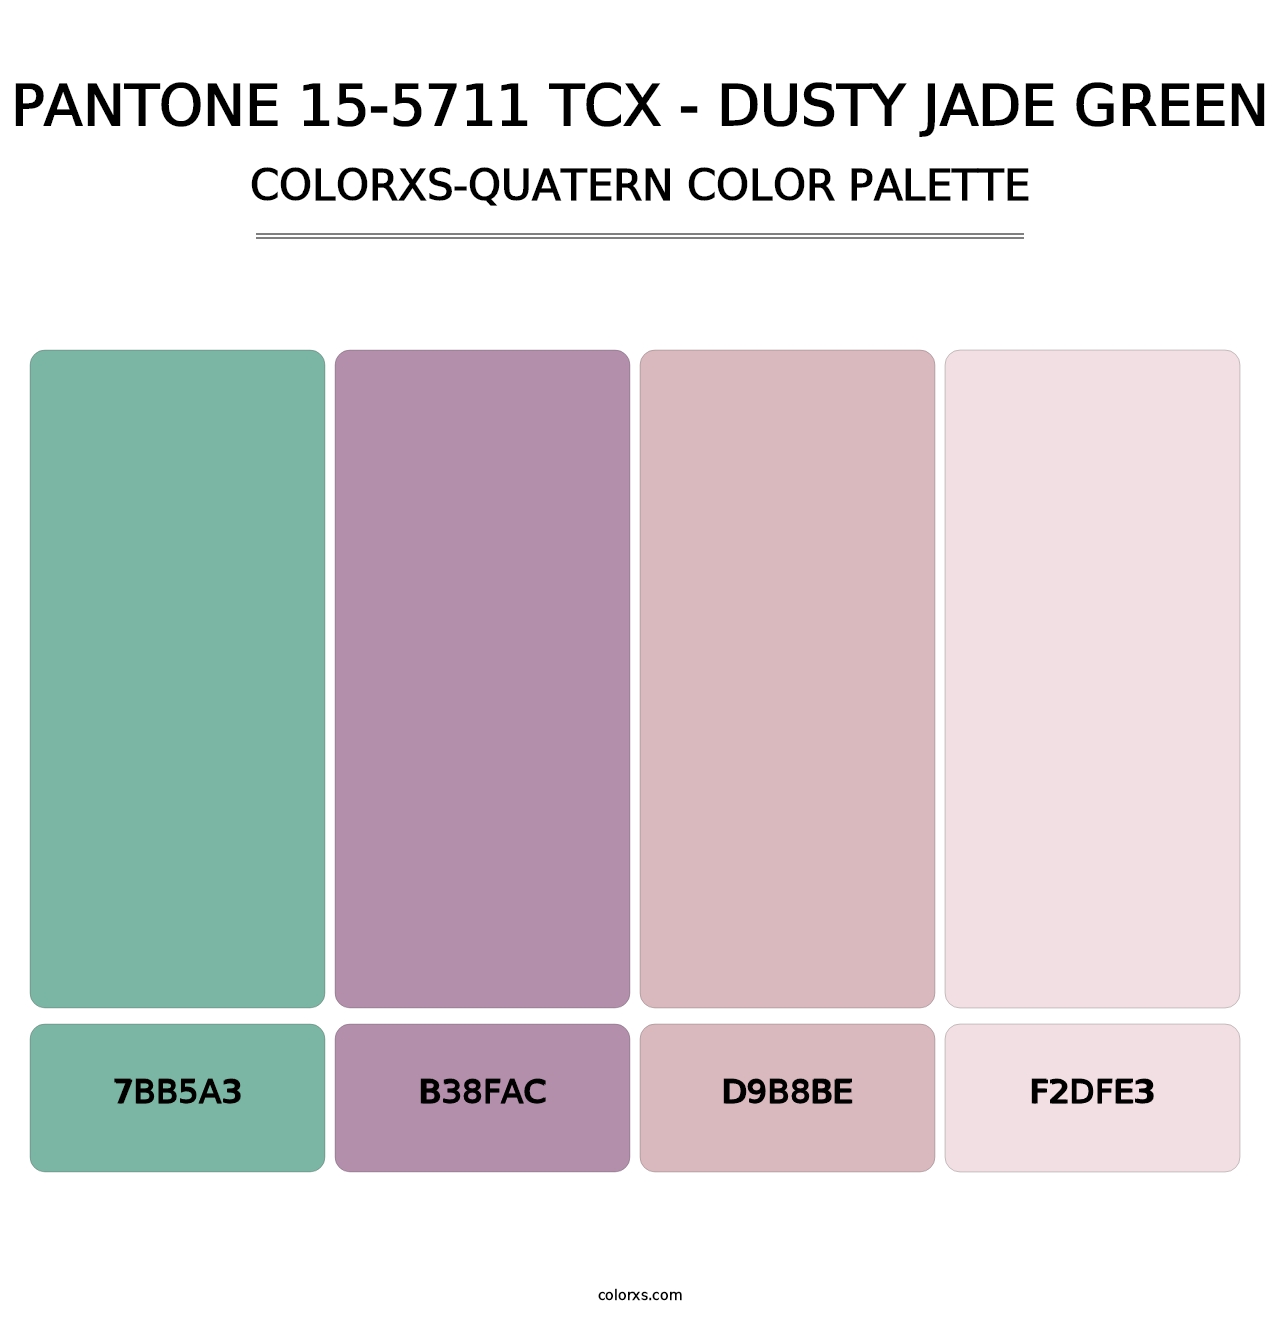 PANTONE 15-5711 TCX - Dusty Jade Green - Colorxs Quatern Palette